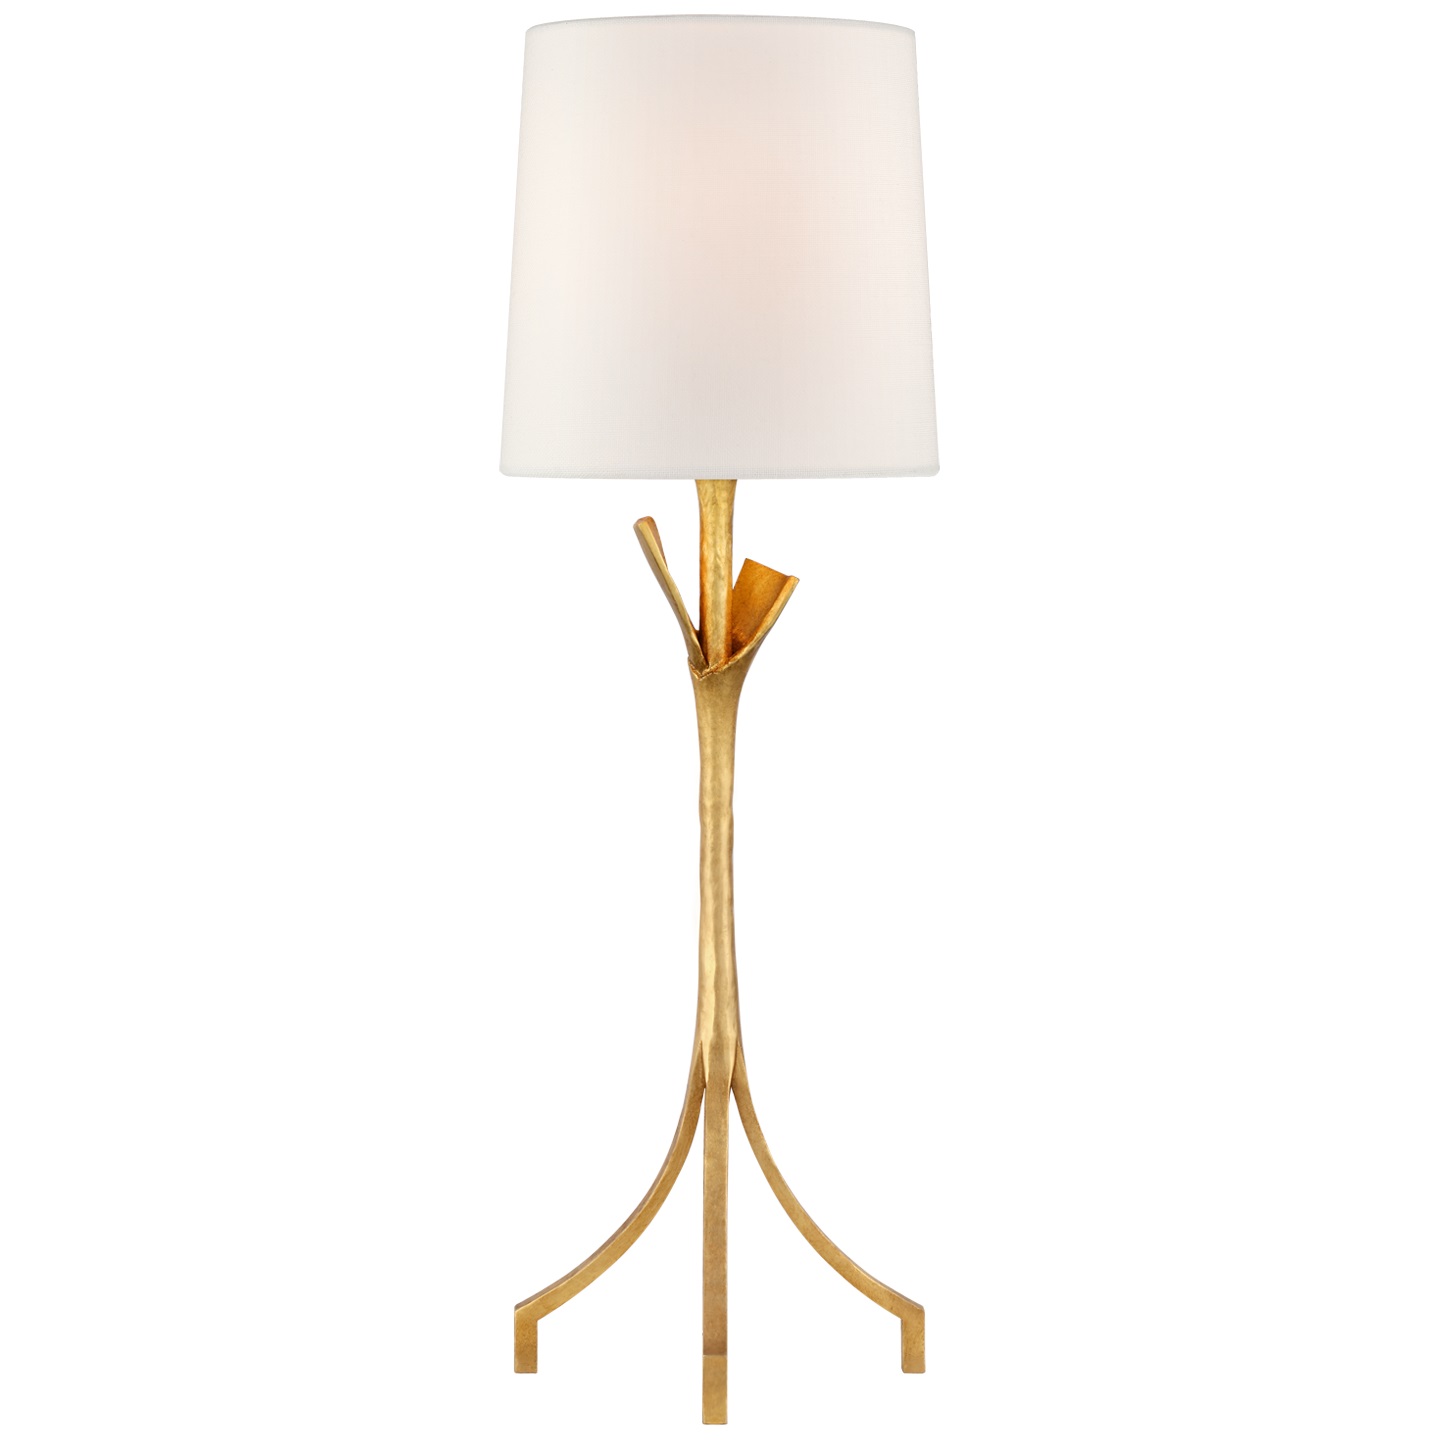 Fliana Table Lamp